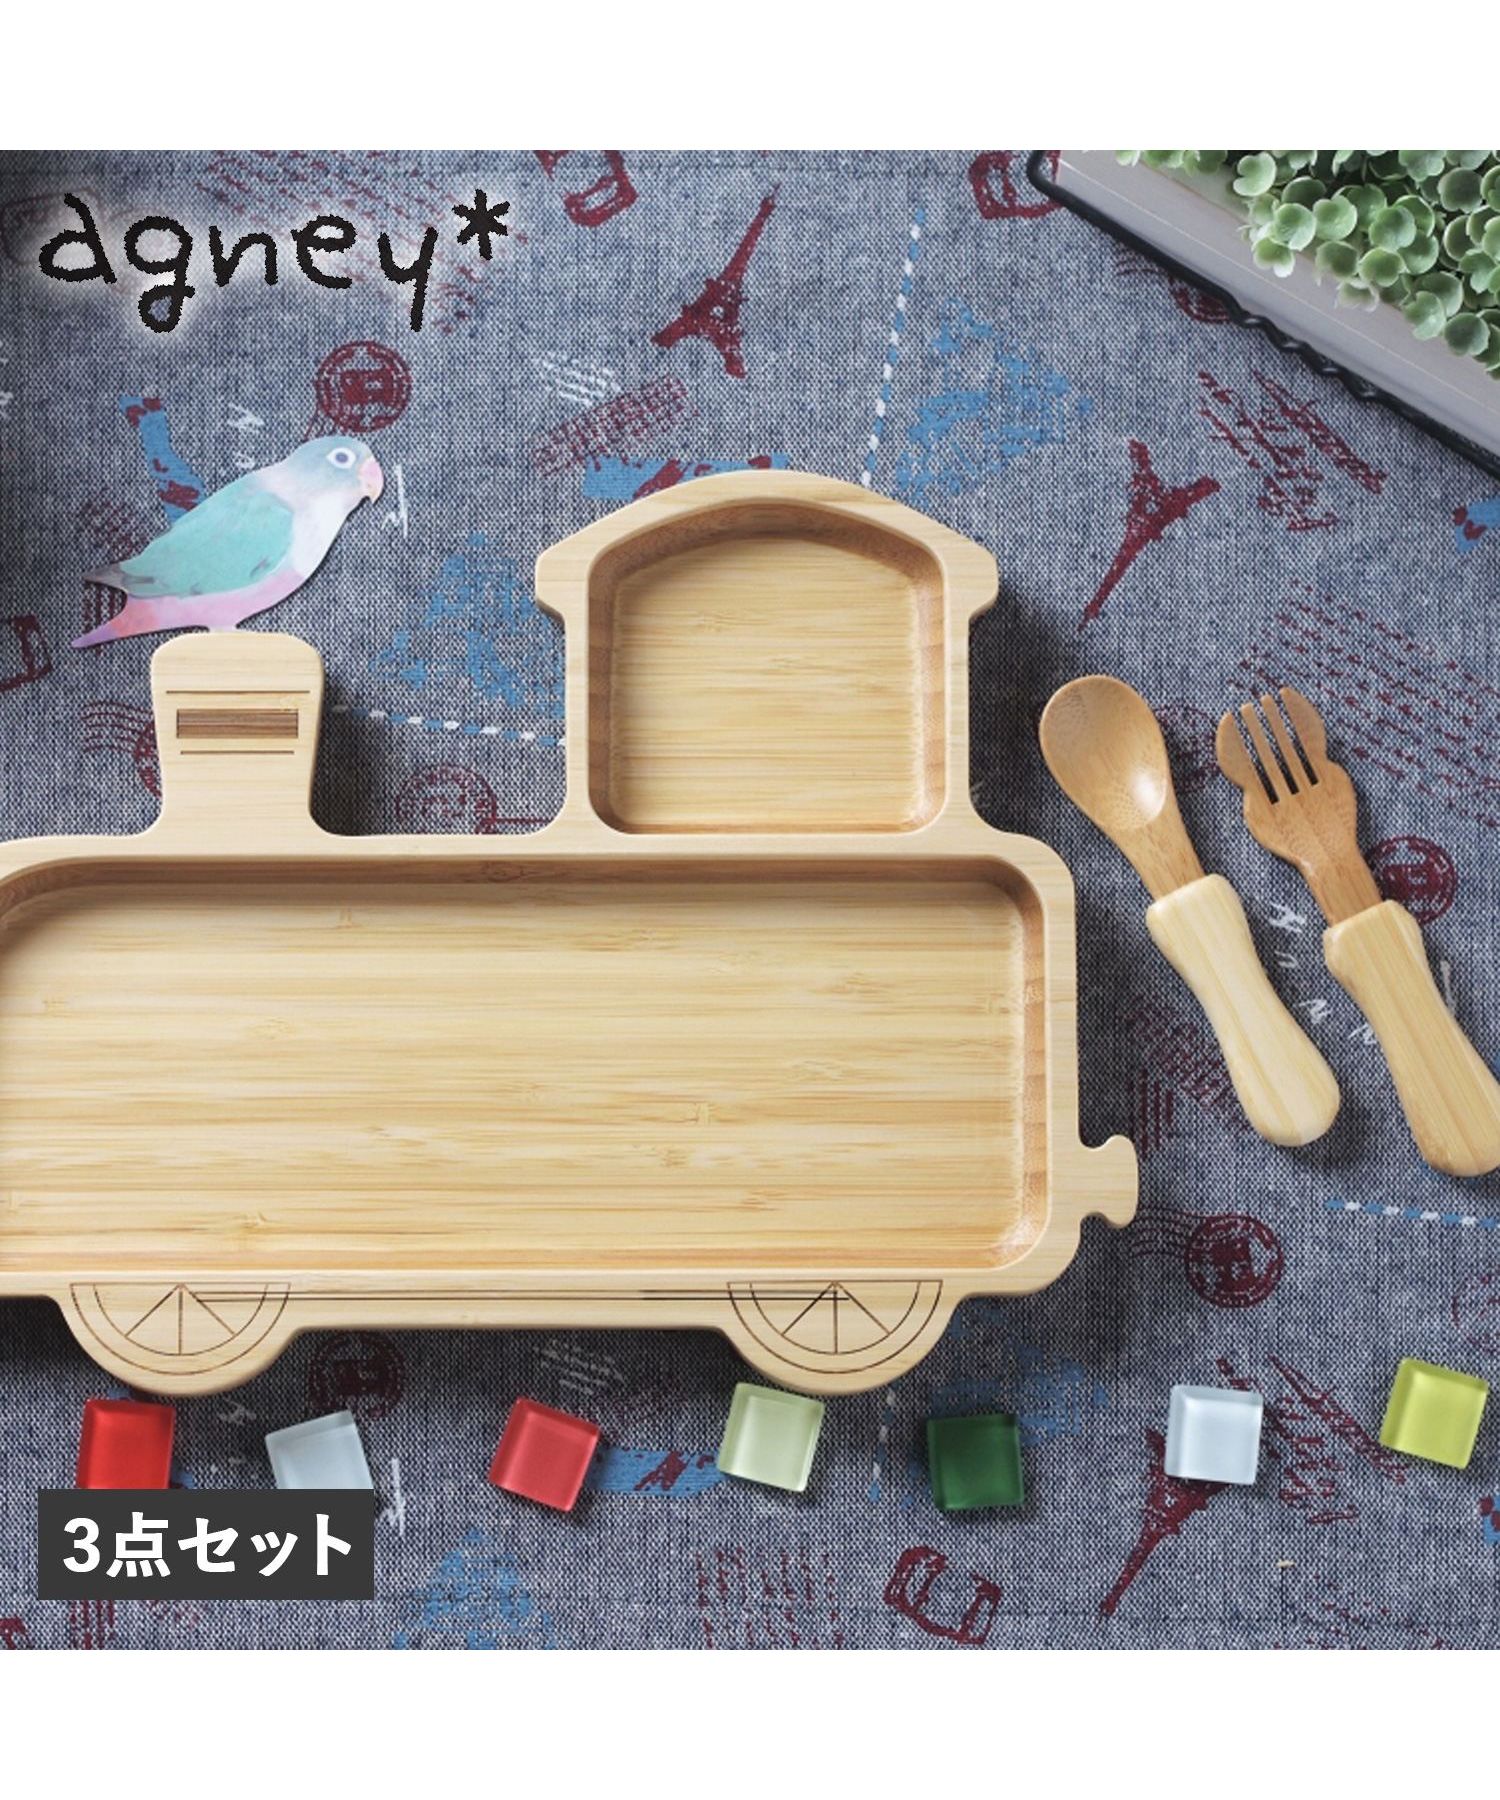 agney アグニー 子供 食器セット ワンプレート きかんしゃプレート 3点セット 男の子 女の子 ベビー 赤ちゃん 天然素材 日本製 食洗器対応  AG－1